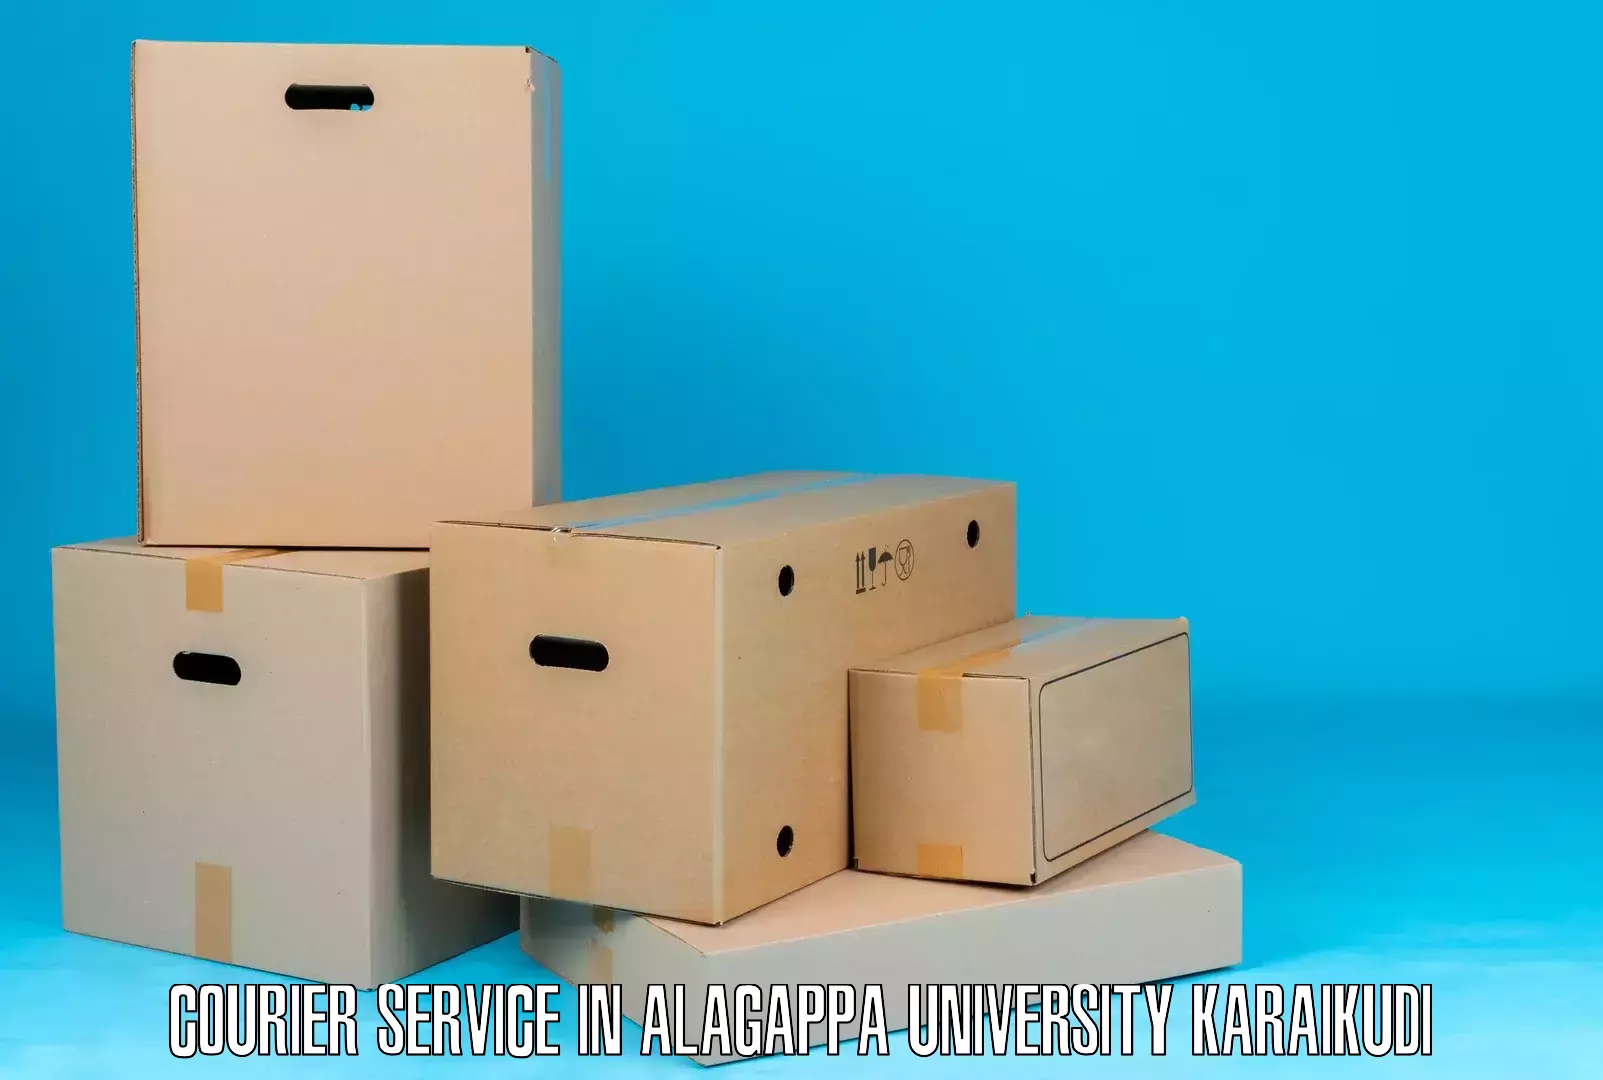 End-to-end delivery in Alagappa University Karaikudi